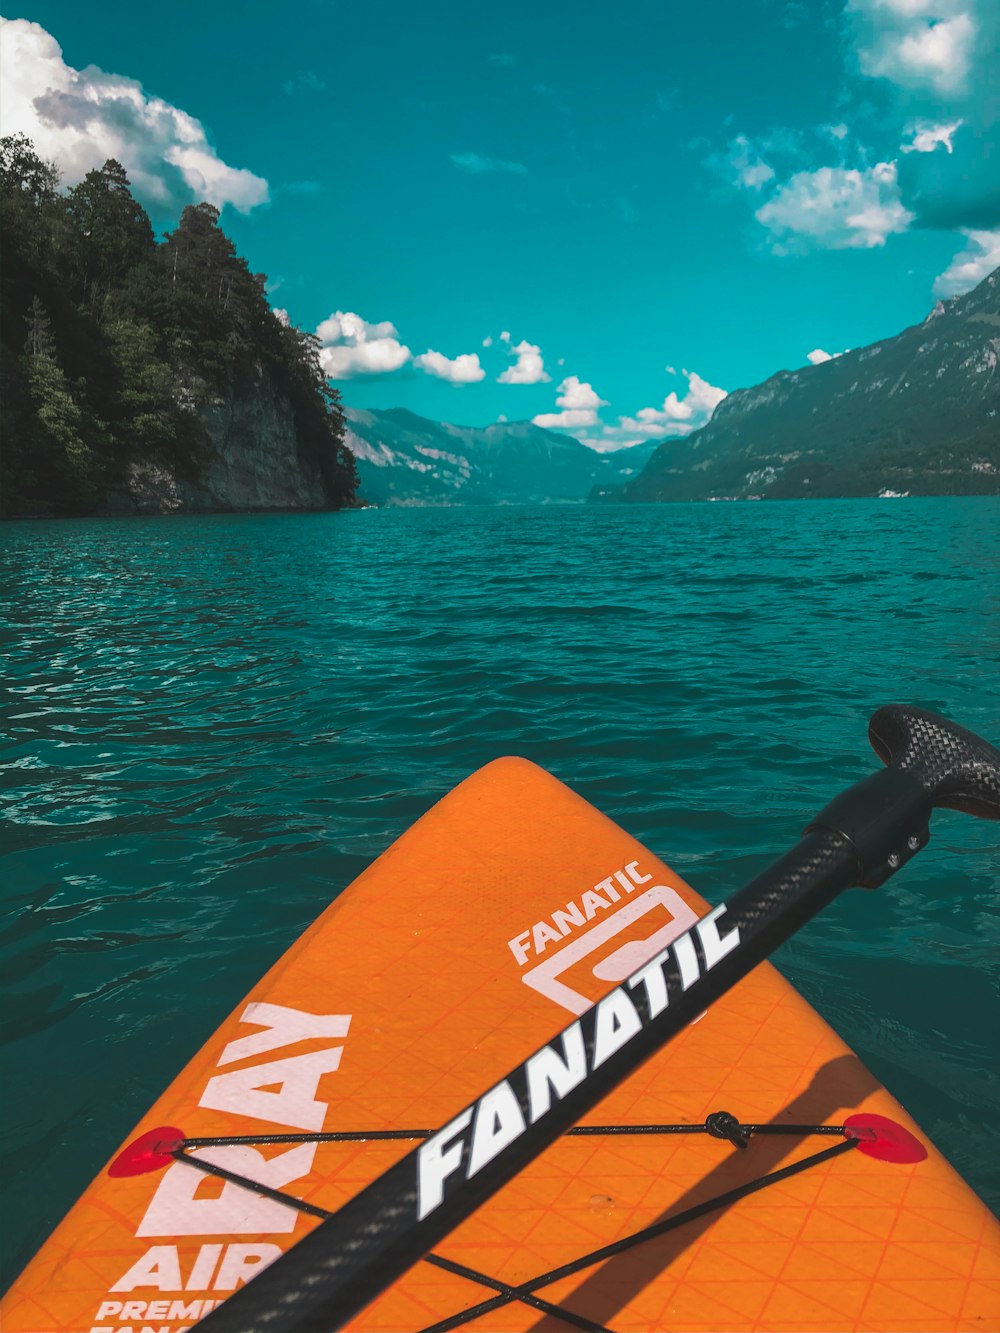 orange and black kayak on water near green trees and mountain during daytime